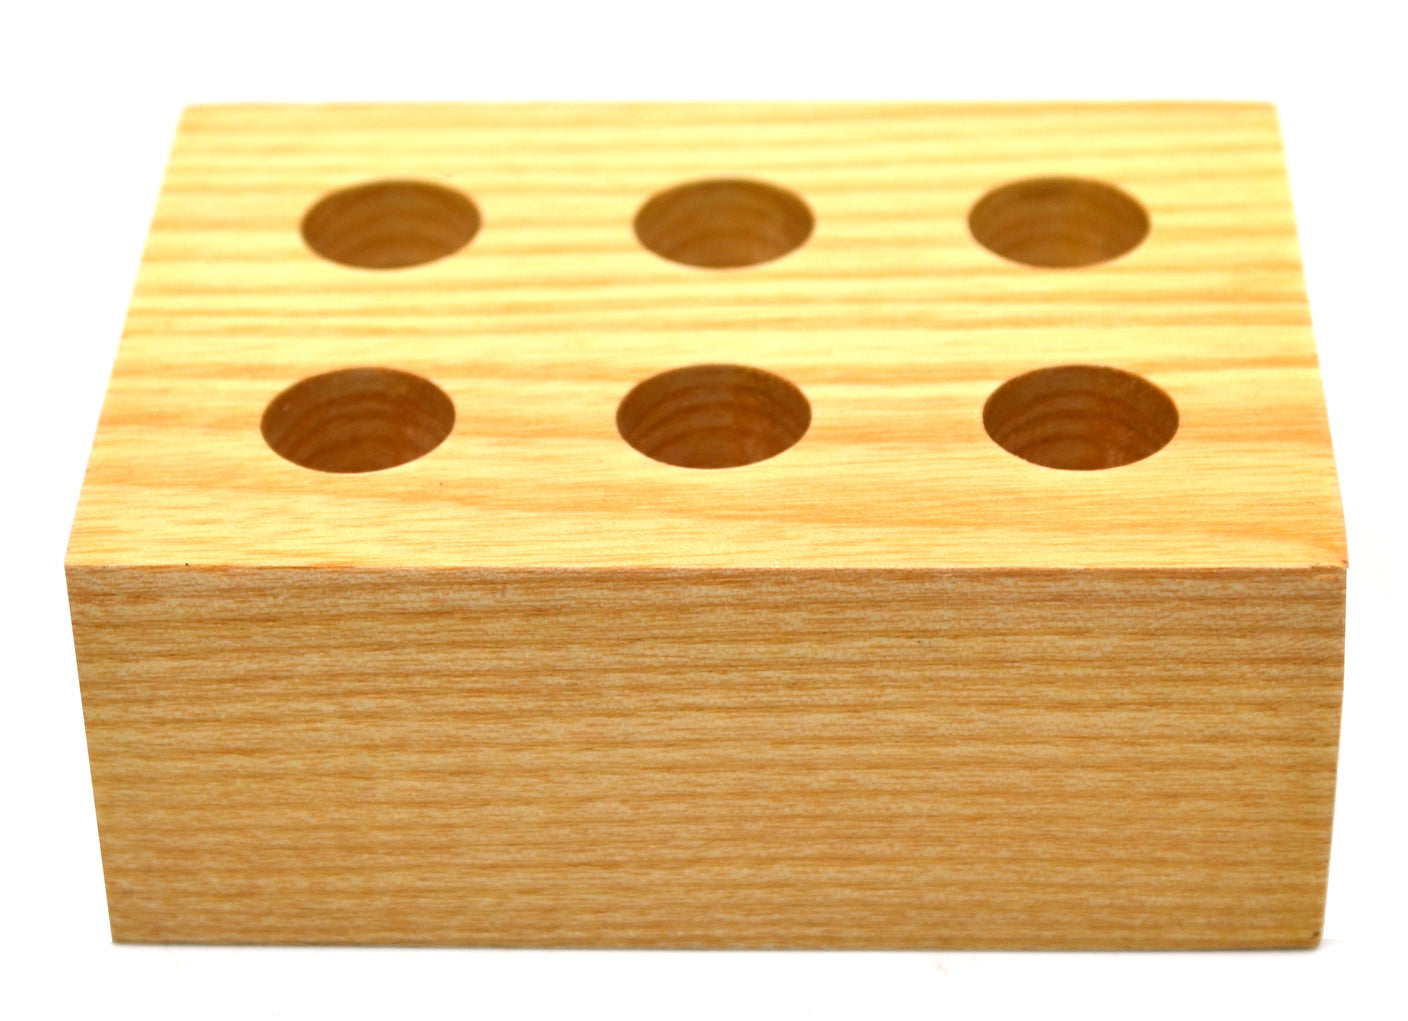 6 units of Wooden Entomology Pin Storage Block, 6 Holes for Various Pin Sizes, 3/8" Diameter Holes